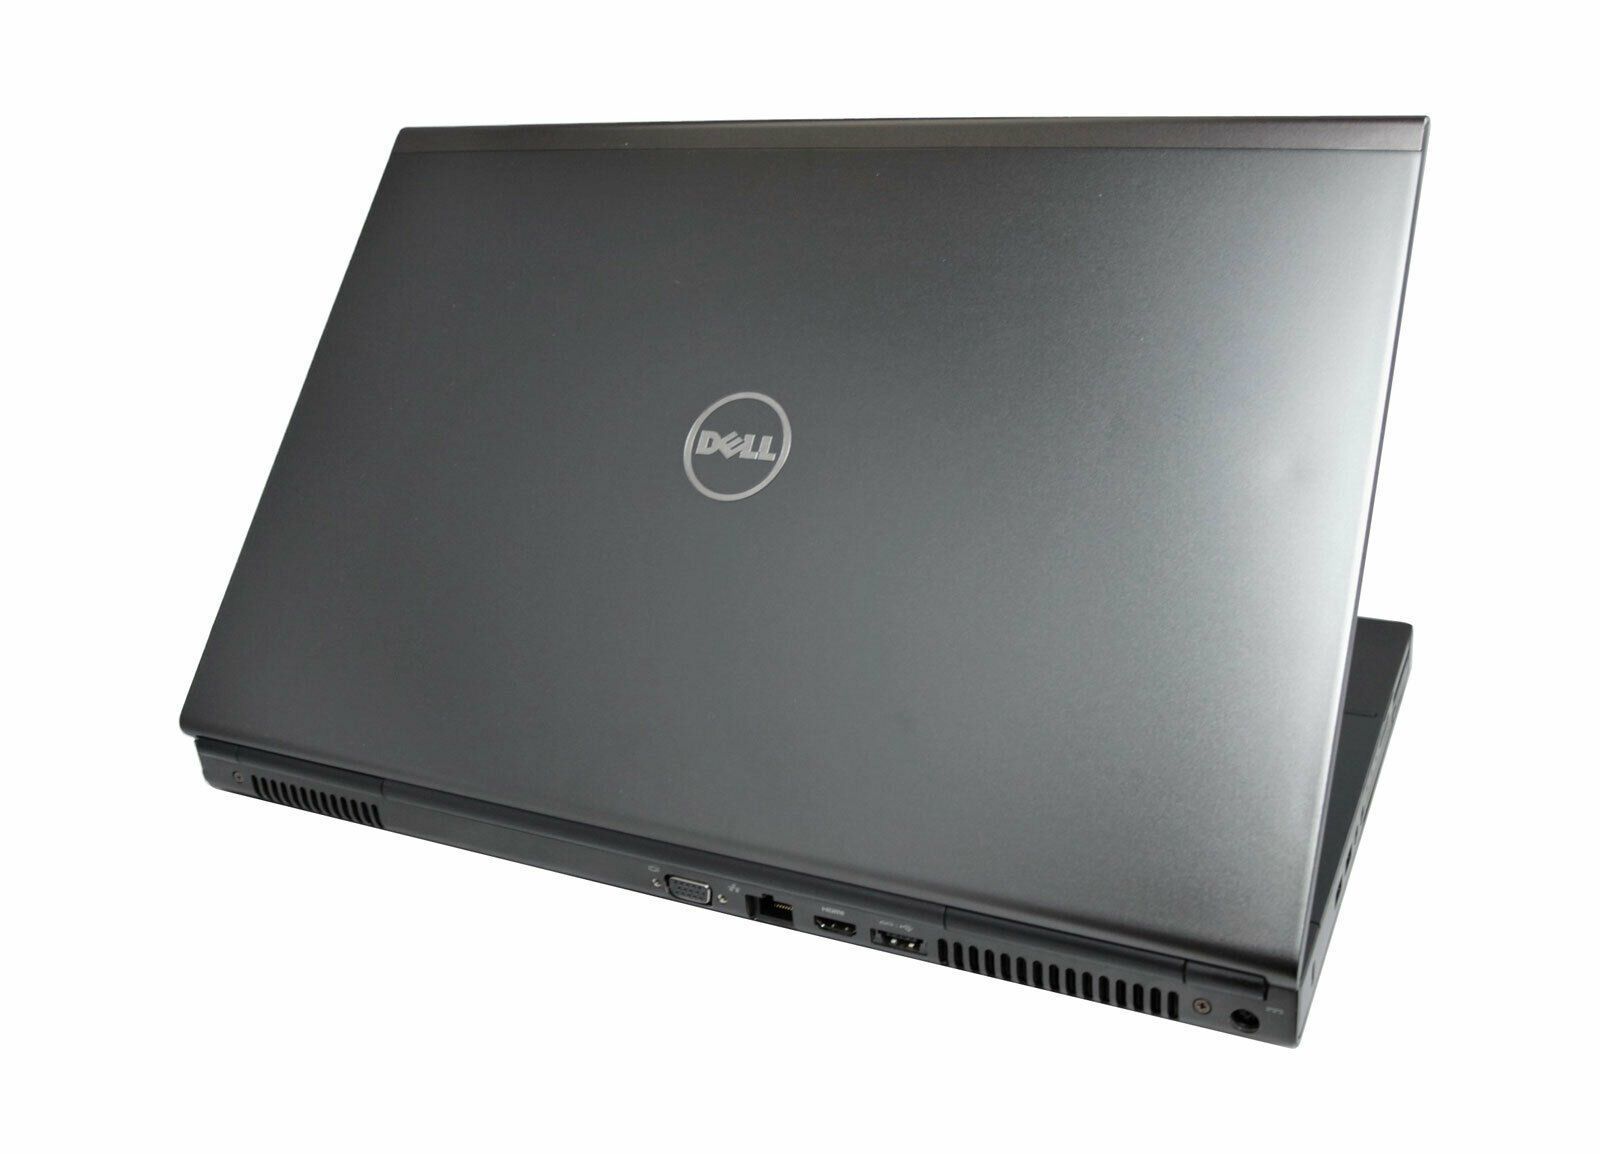 Dell Precision M6800 17" FHD CAD Laptop: Core i7-4600M, 256GB+HDD, VAT, Warranty - CruiseTech